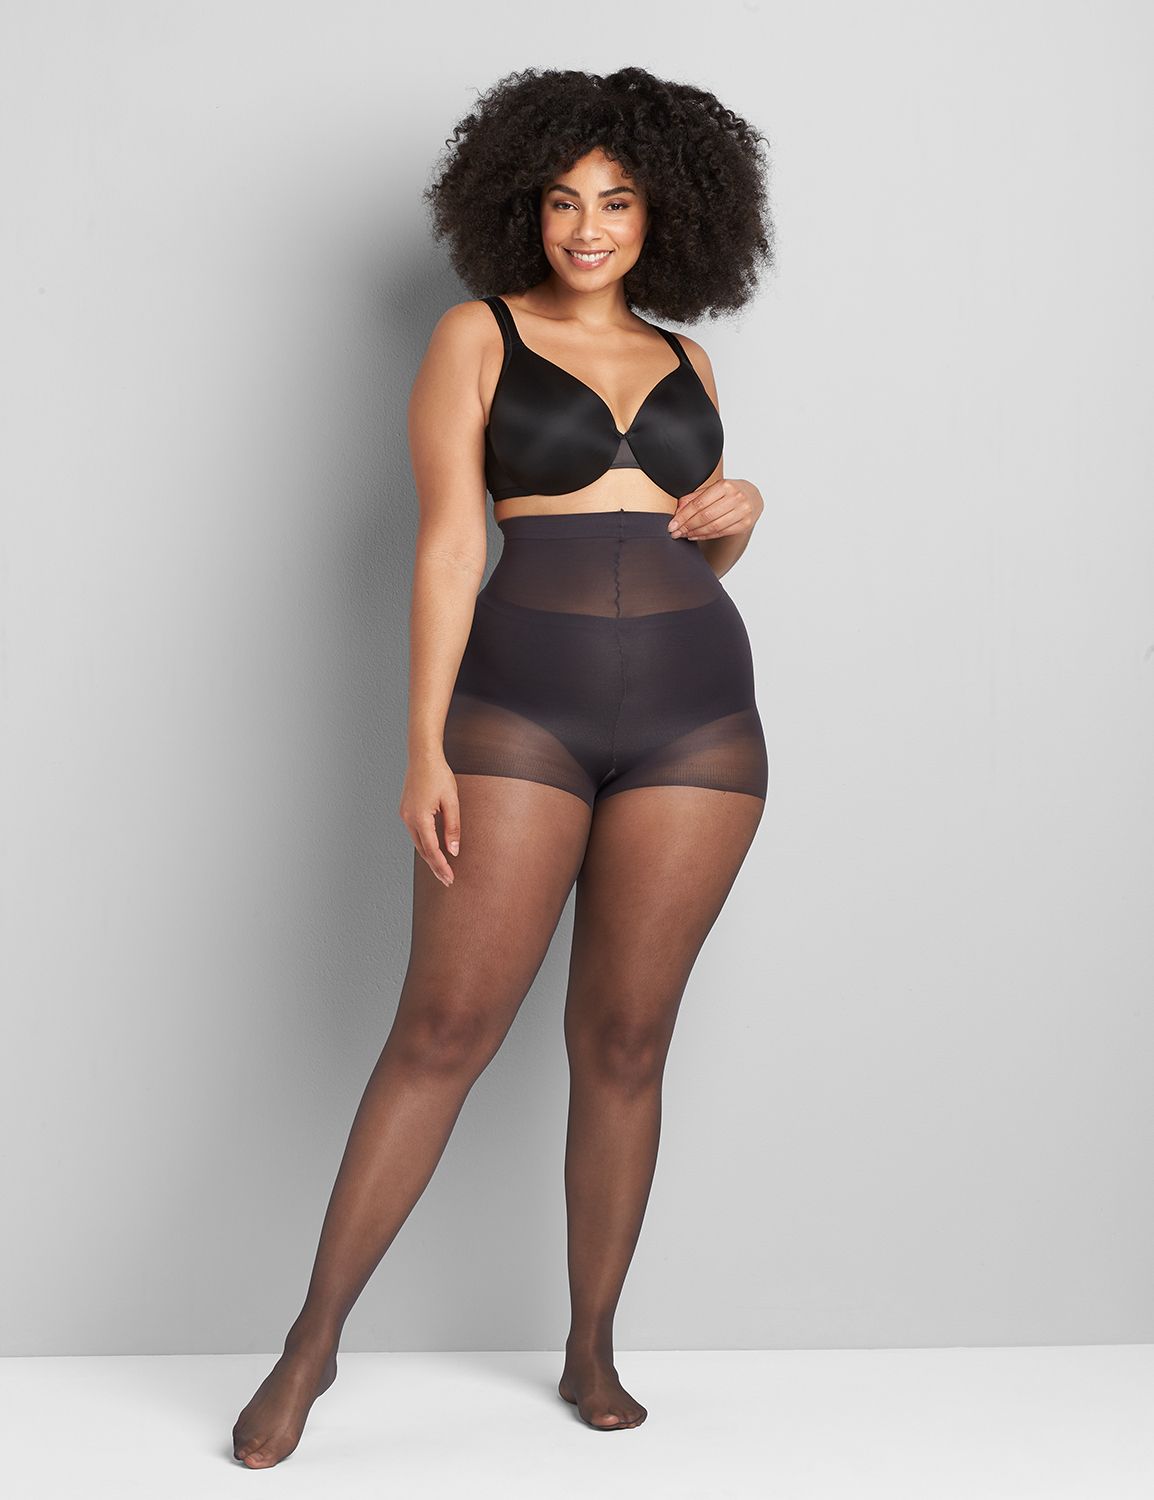 Women's Control Top Pantyhose High Waist Plus Size Tights Ultra-soft Black